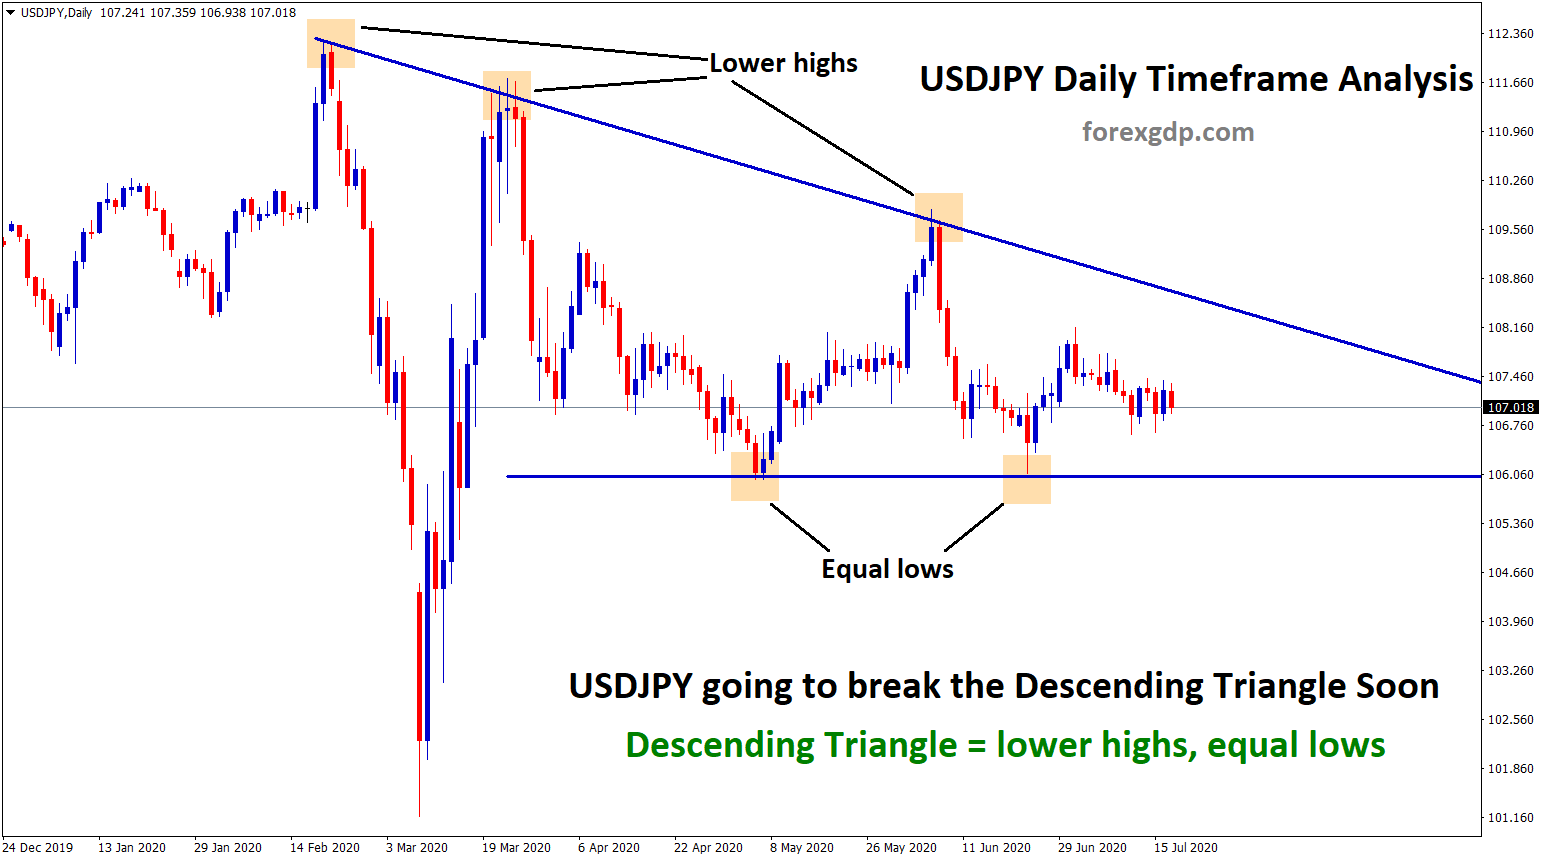 usdjpy descending triangle breakout confirm soon